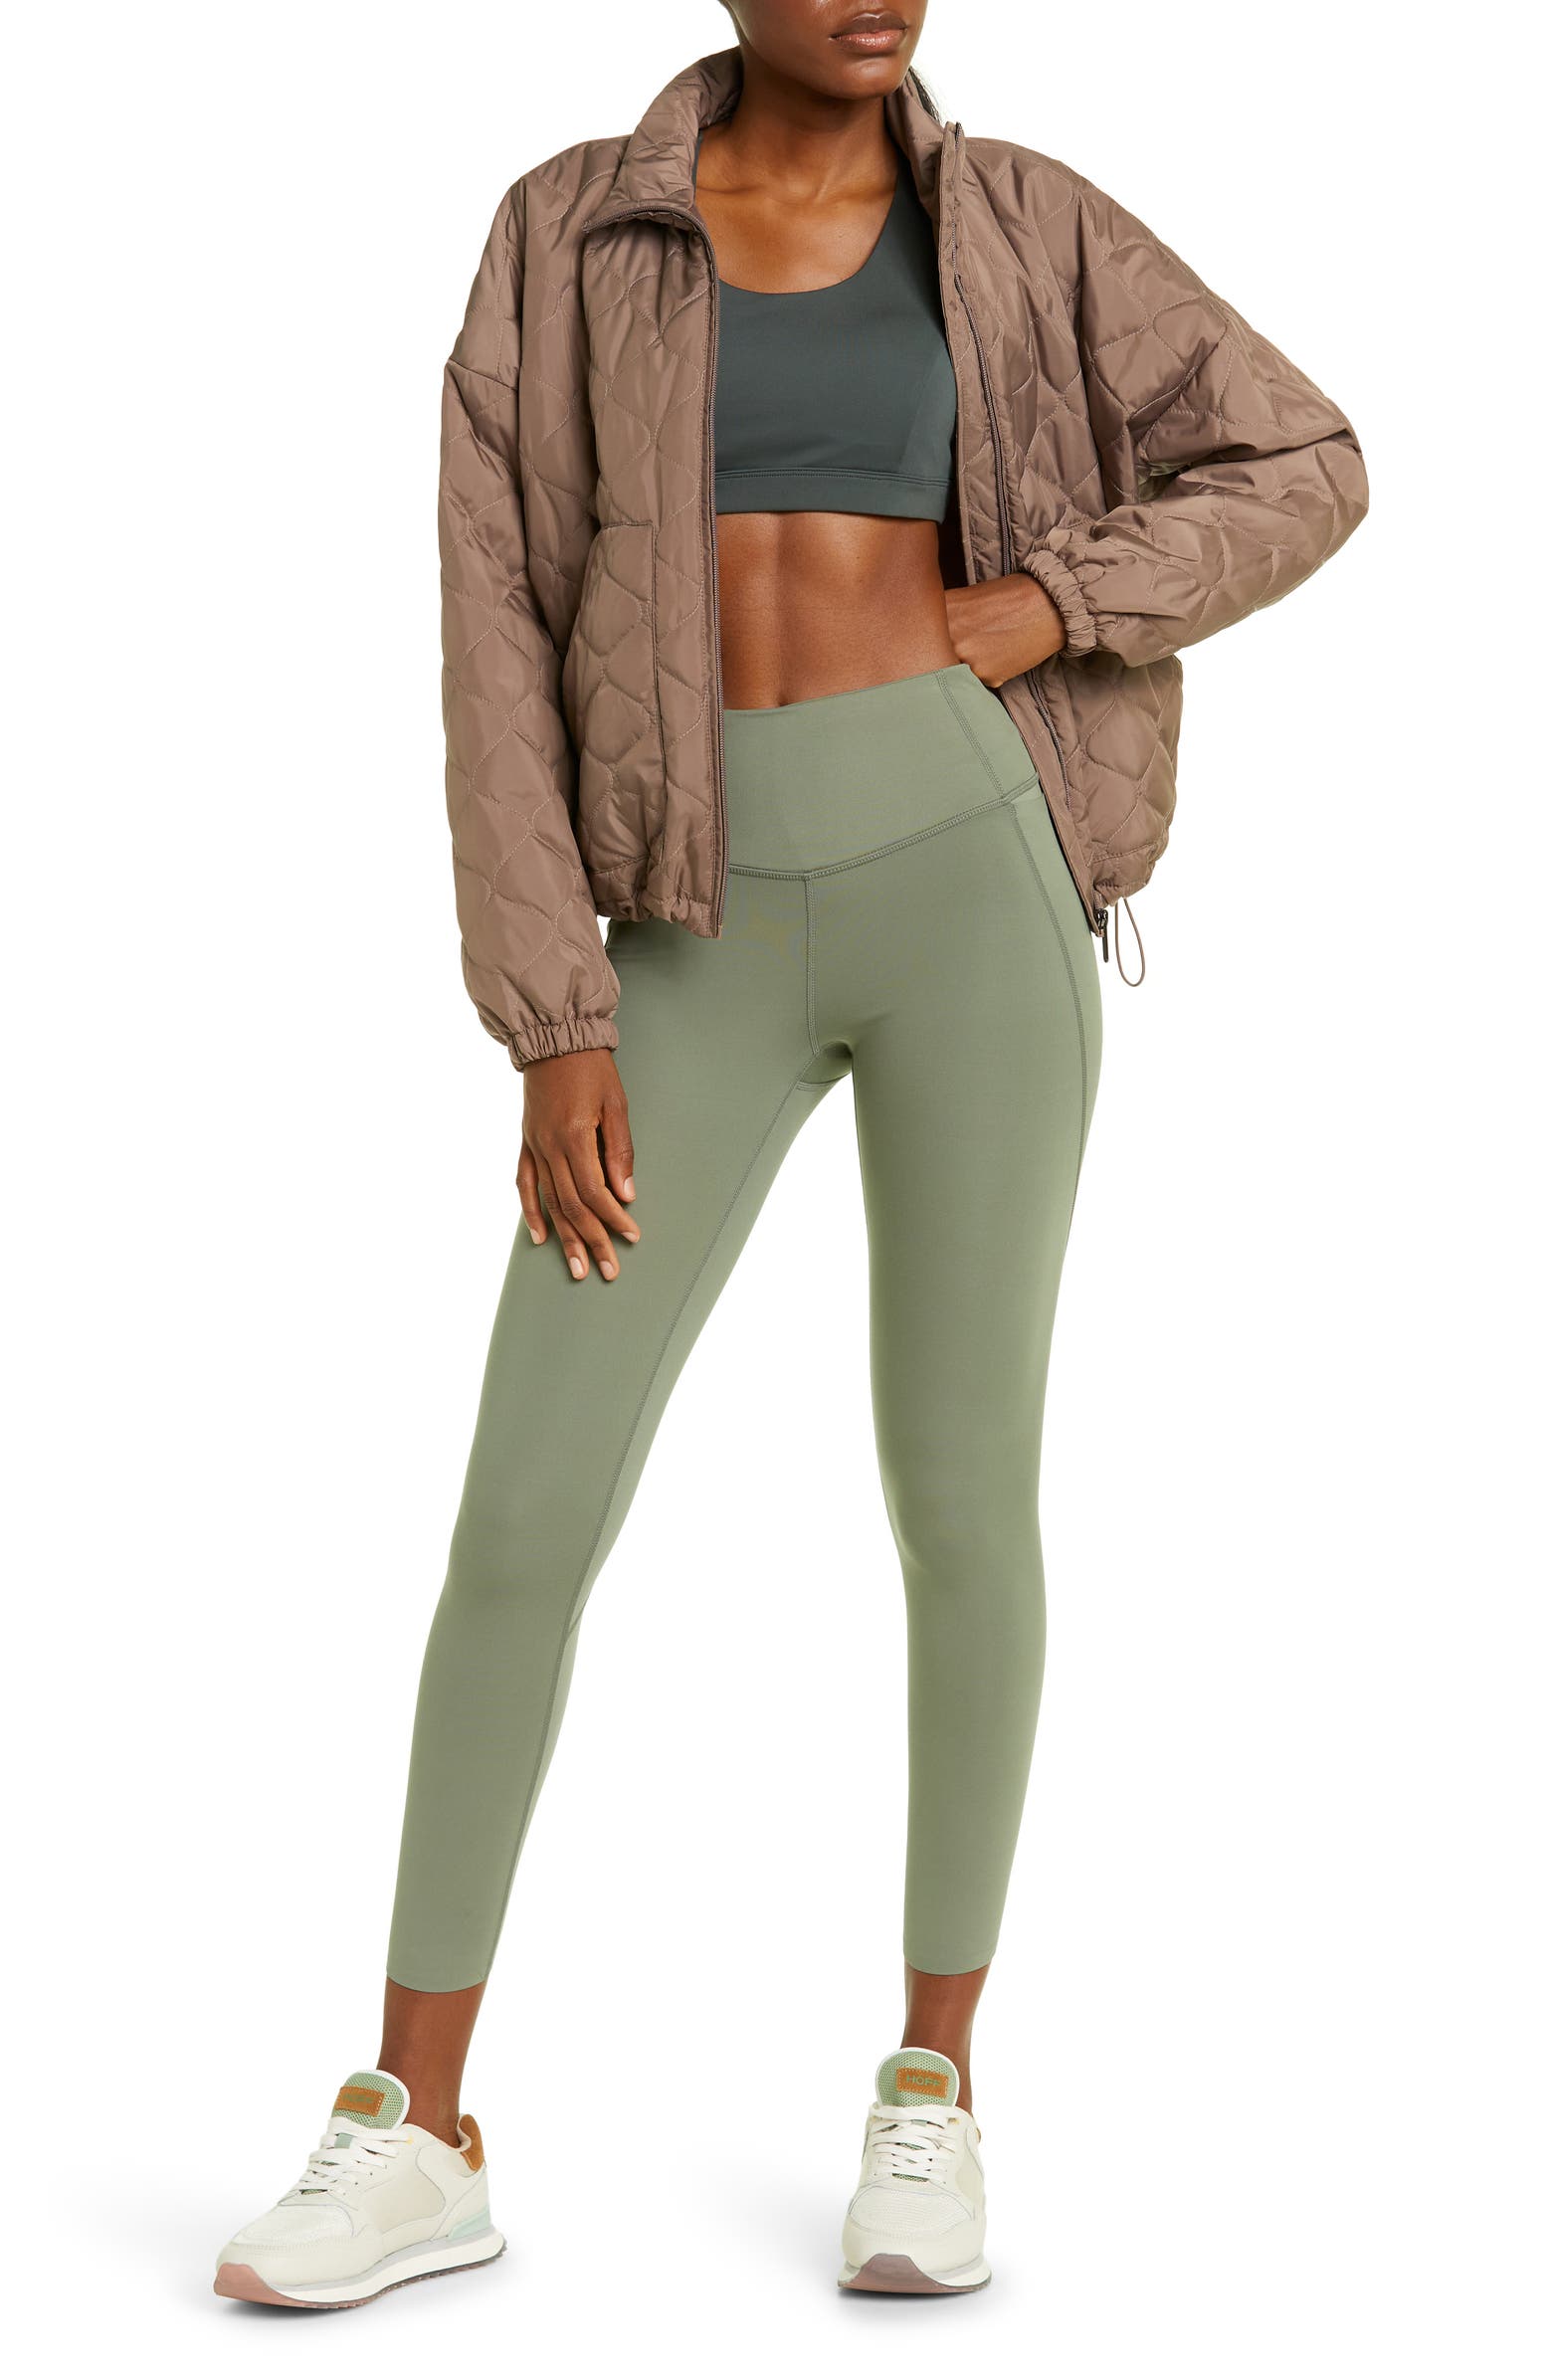 Sage green leggings like Gymshark from Zella